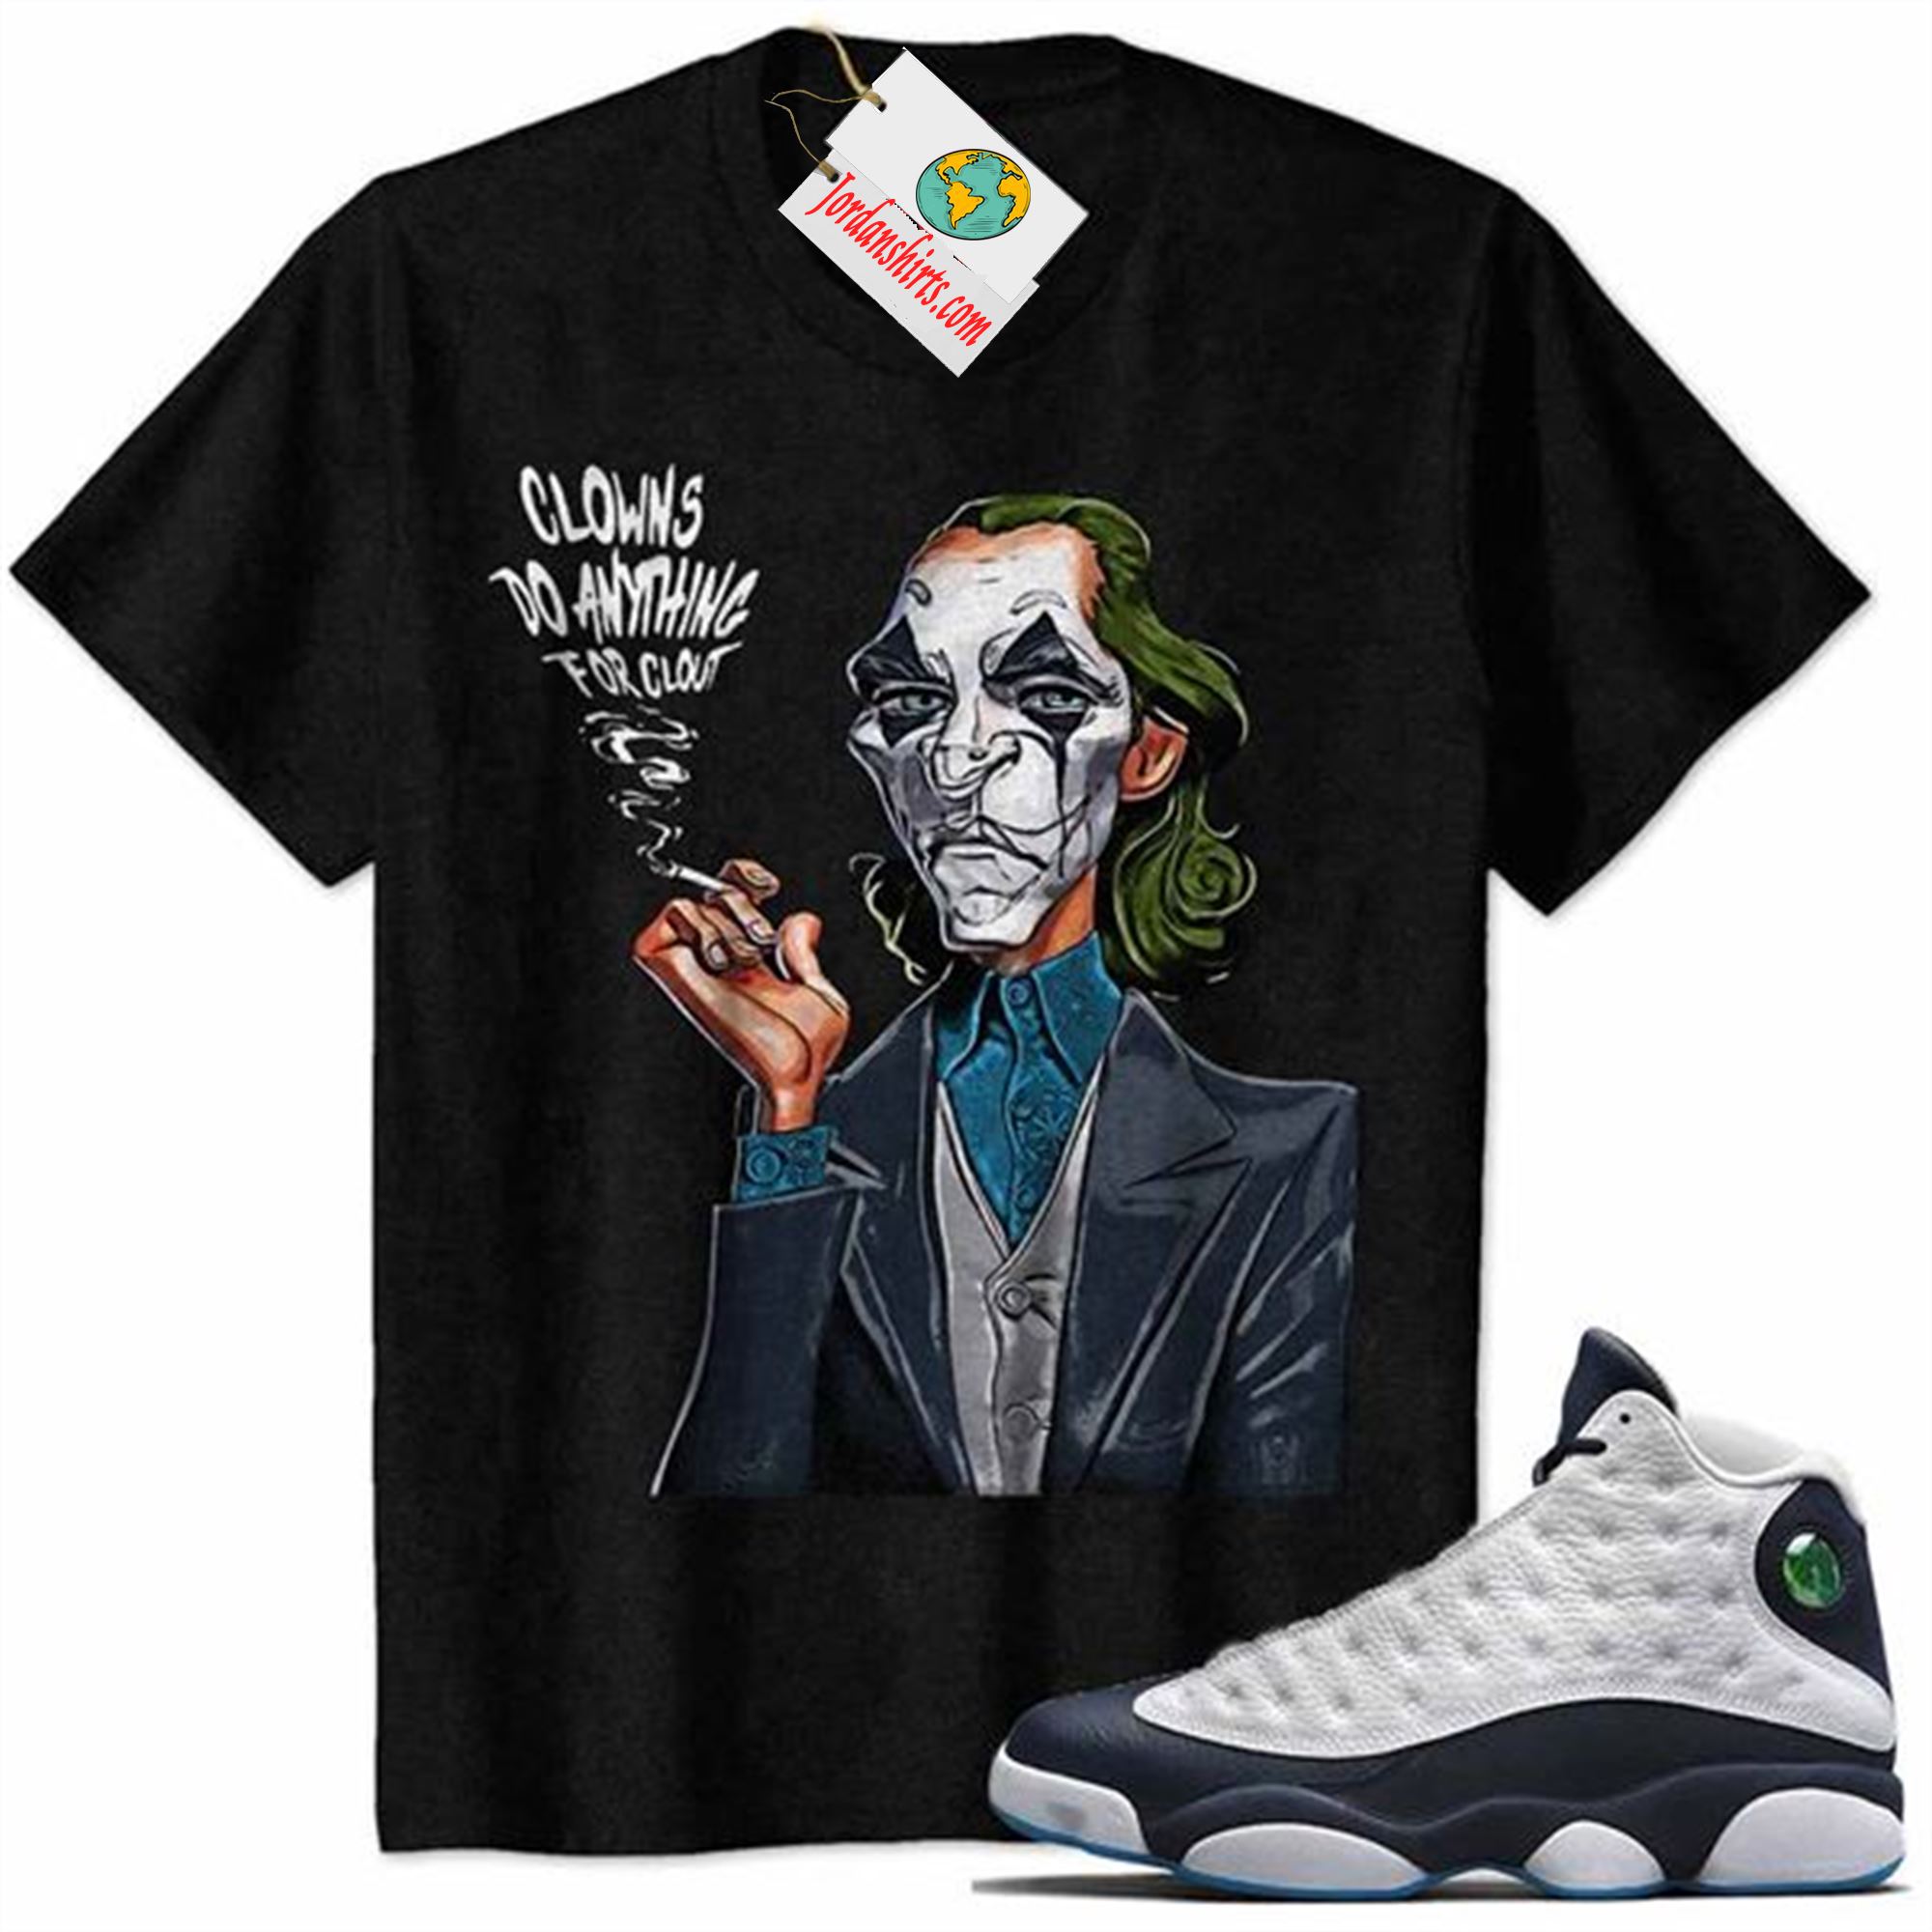 Jordan 13 Shirt, Clowns Do Any Thing For Clout Black Air Jordan 13 Obsidian 13s Plus Size Up To 5xl